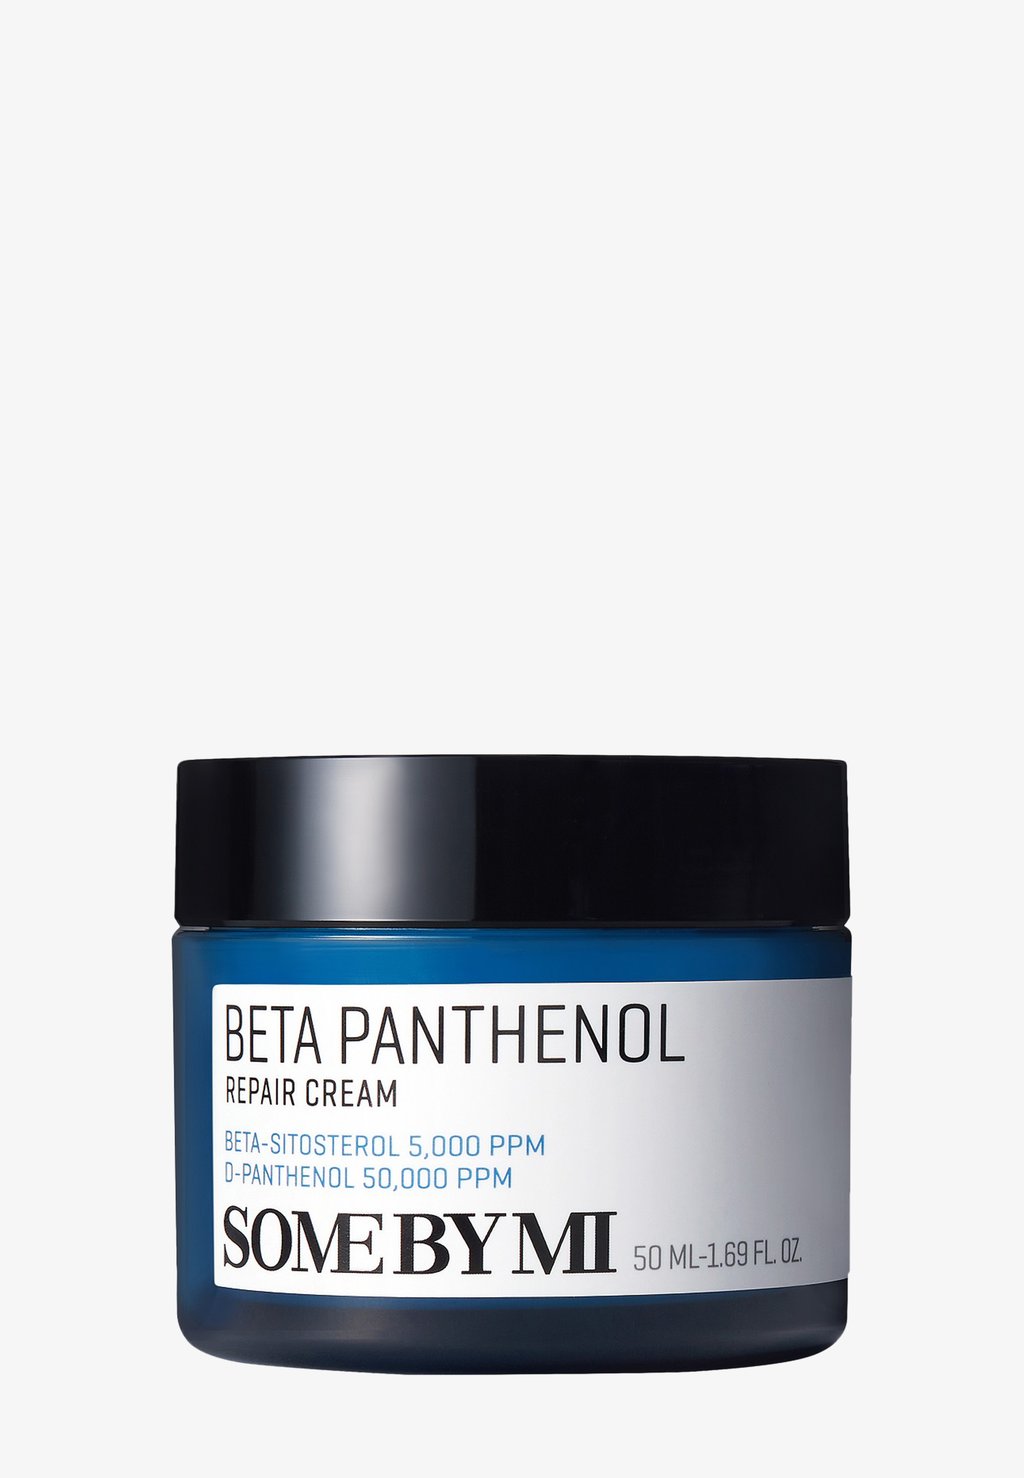 Дневной крем Beta Panthenol Repair Cream SOME BY MI